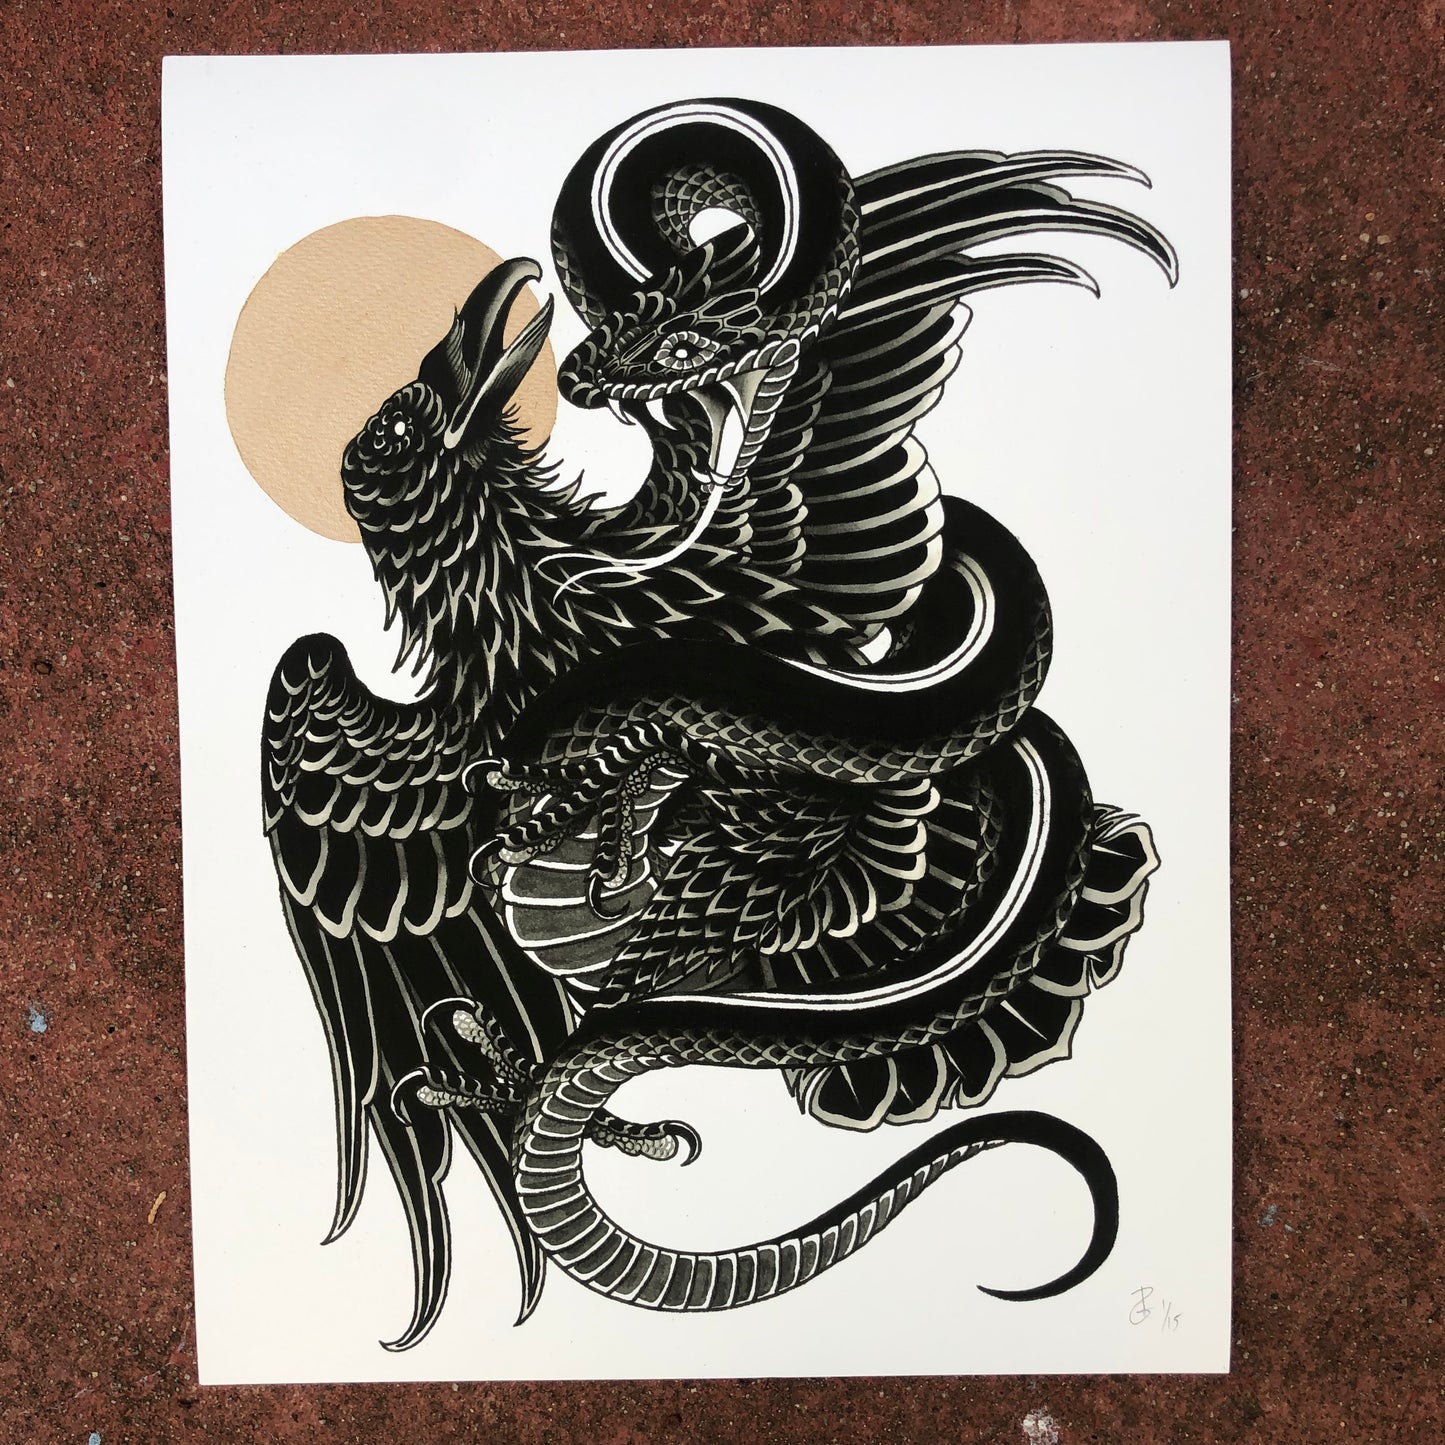 Phil Geck "Crow and Snake" Print (2021)